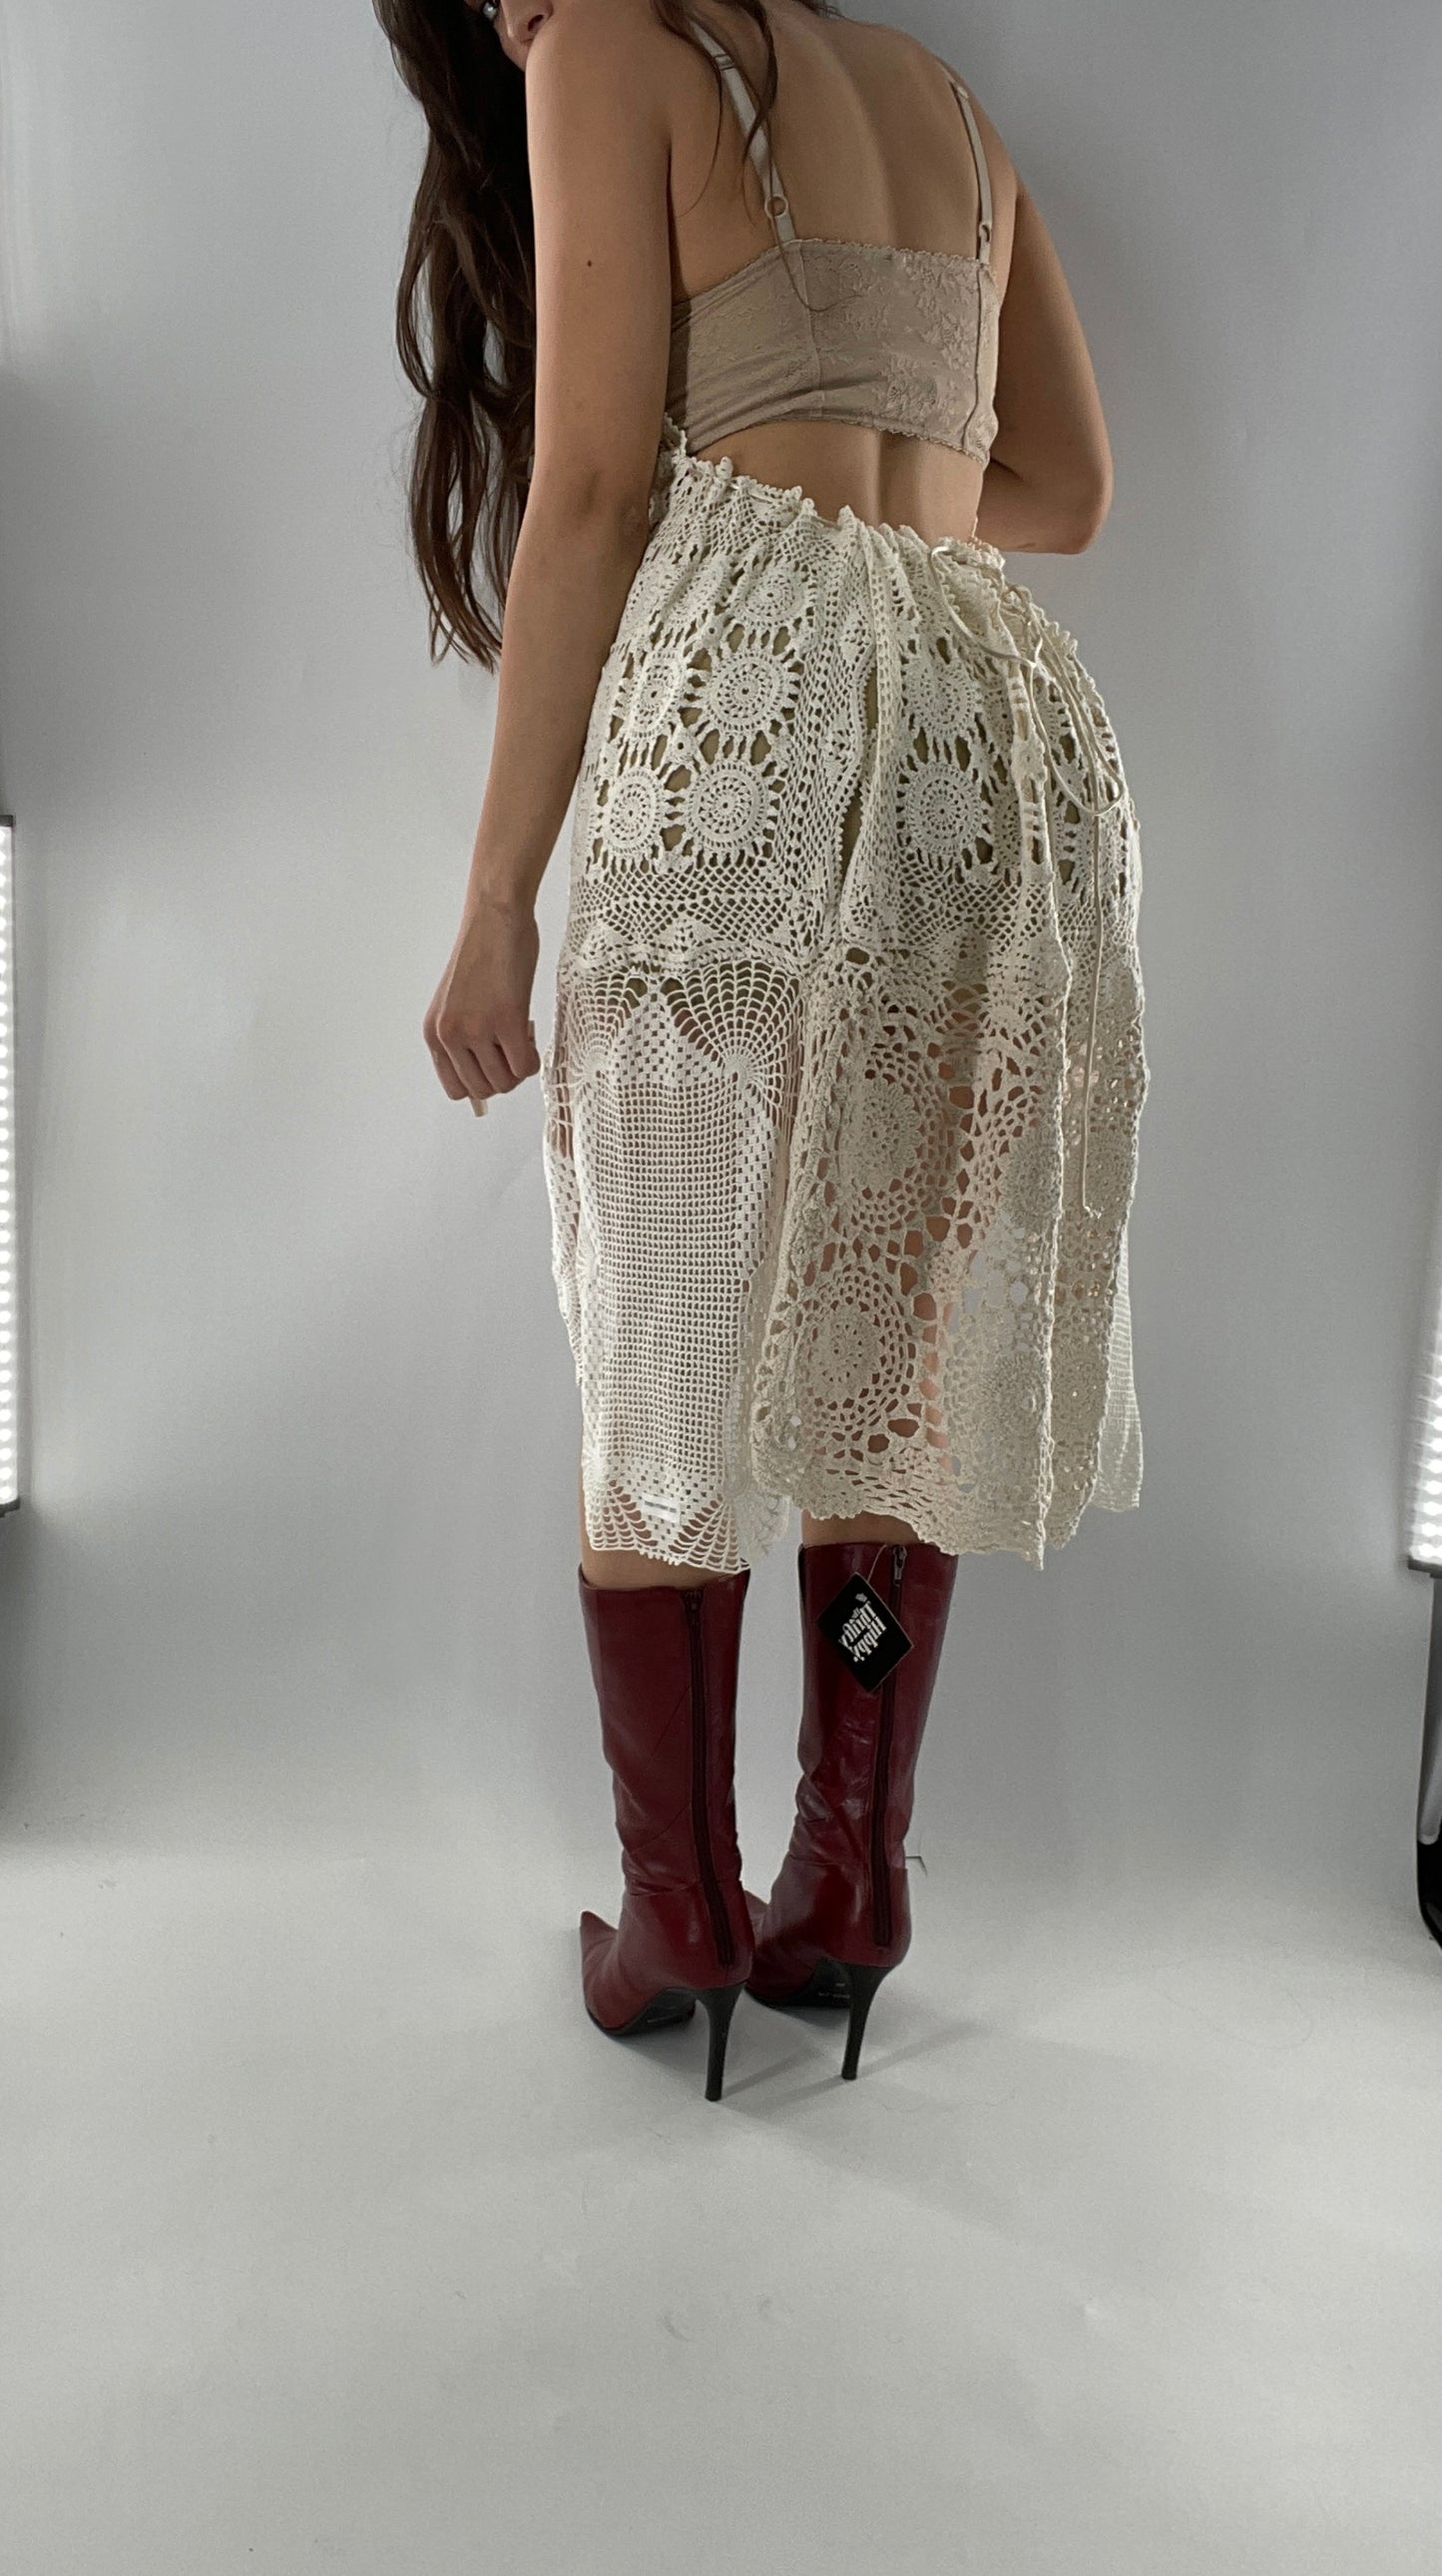 Vintage Handmade Crochet Cottage Adjustable Dress with Open, Low Back (One Size)